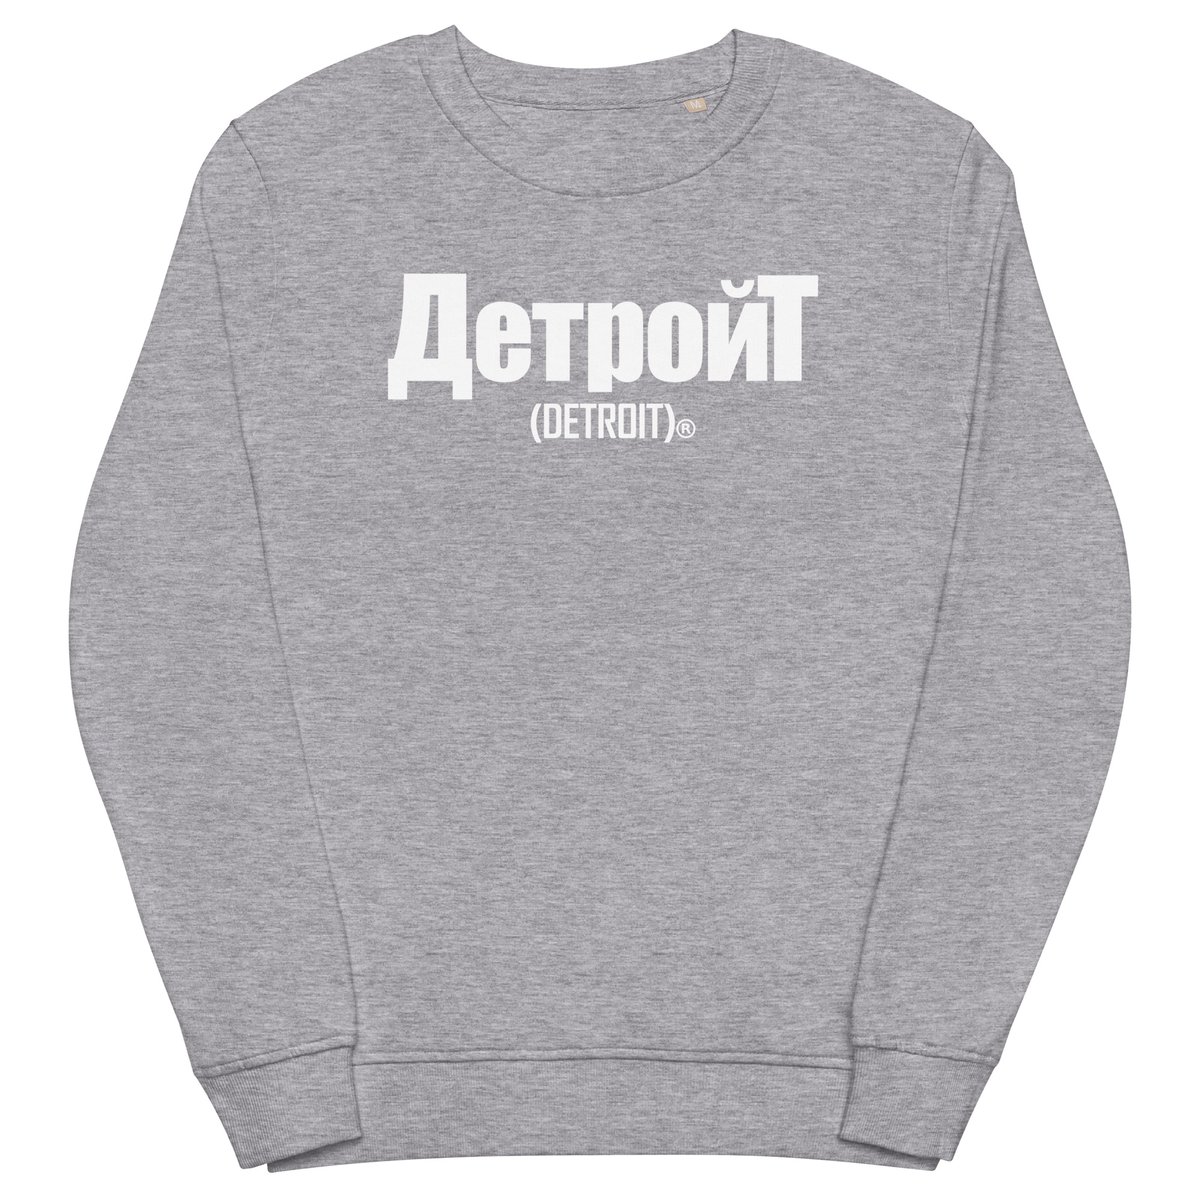 Image of Детройт Detroit Sweater (Classic colors)